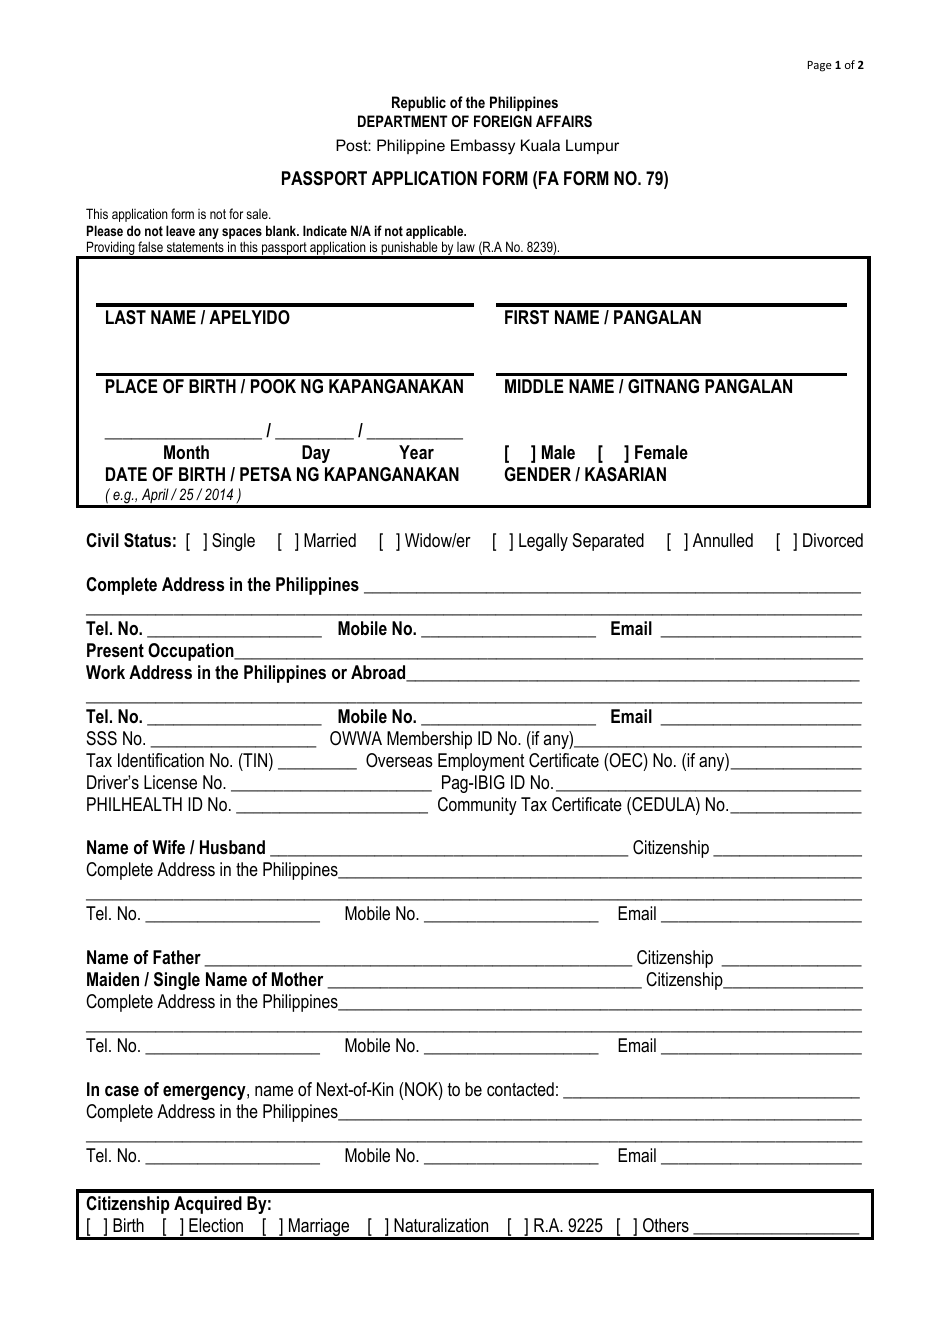 FA Form NO. 79 Passport Application Form - Philippine Embassy Kuala Lumpur - Philippines, Page 1